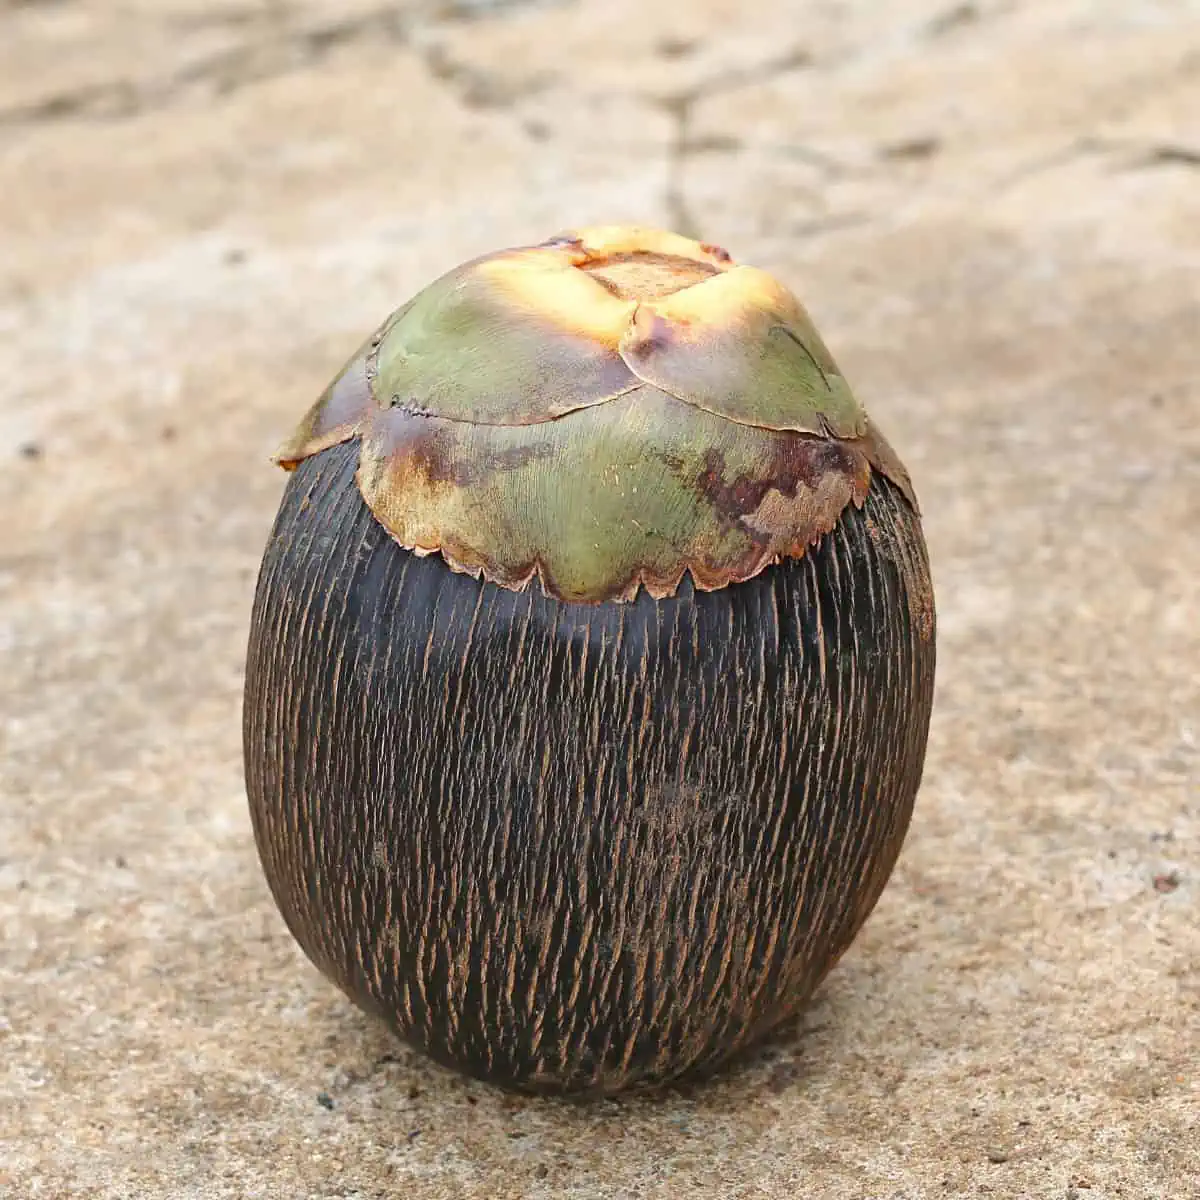 Sugar palm fruit. 